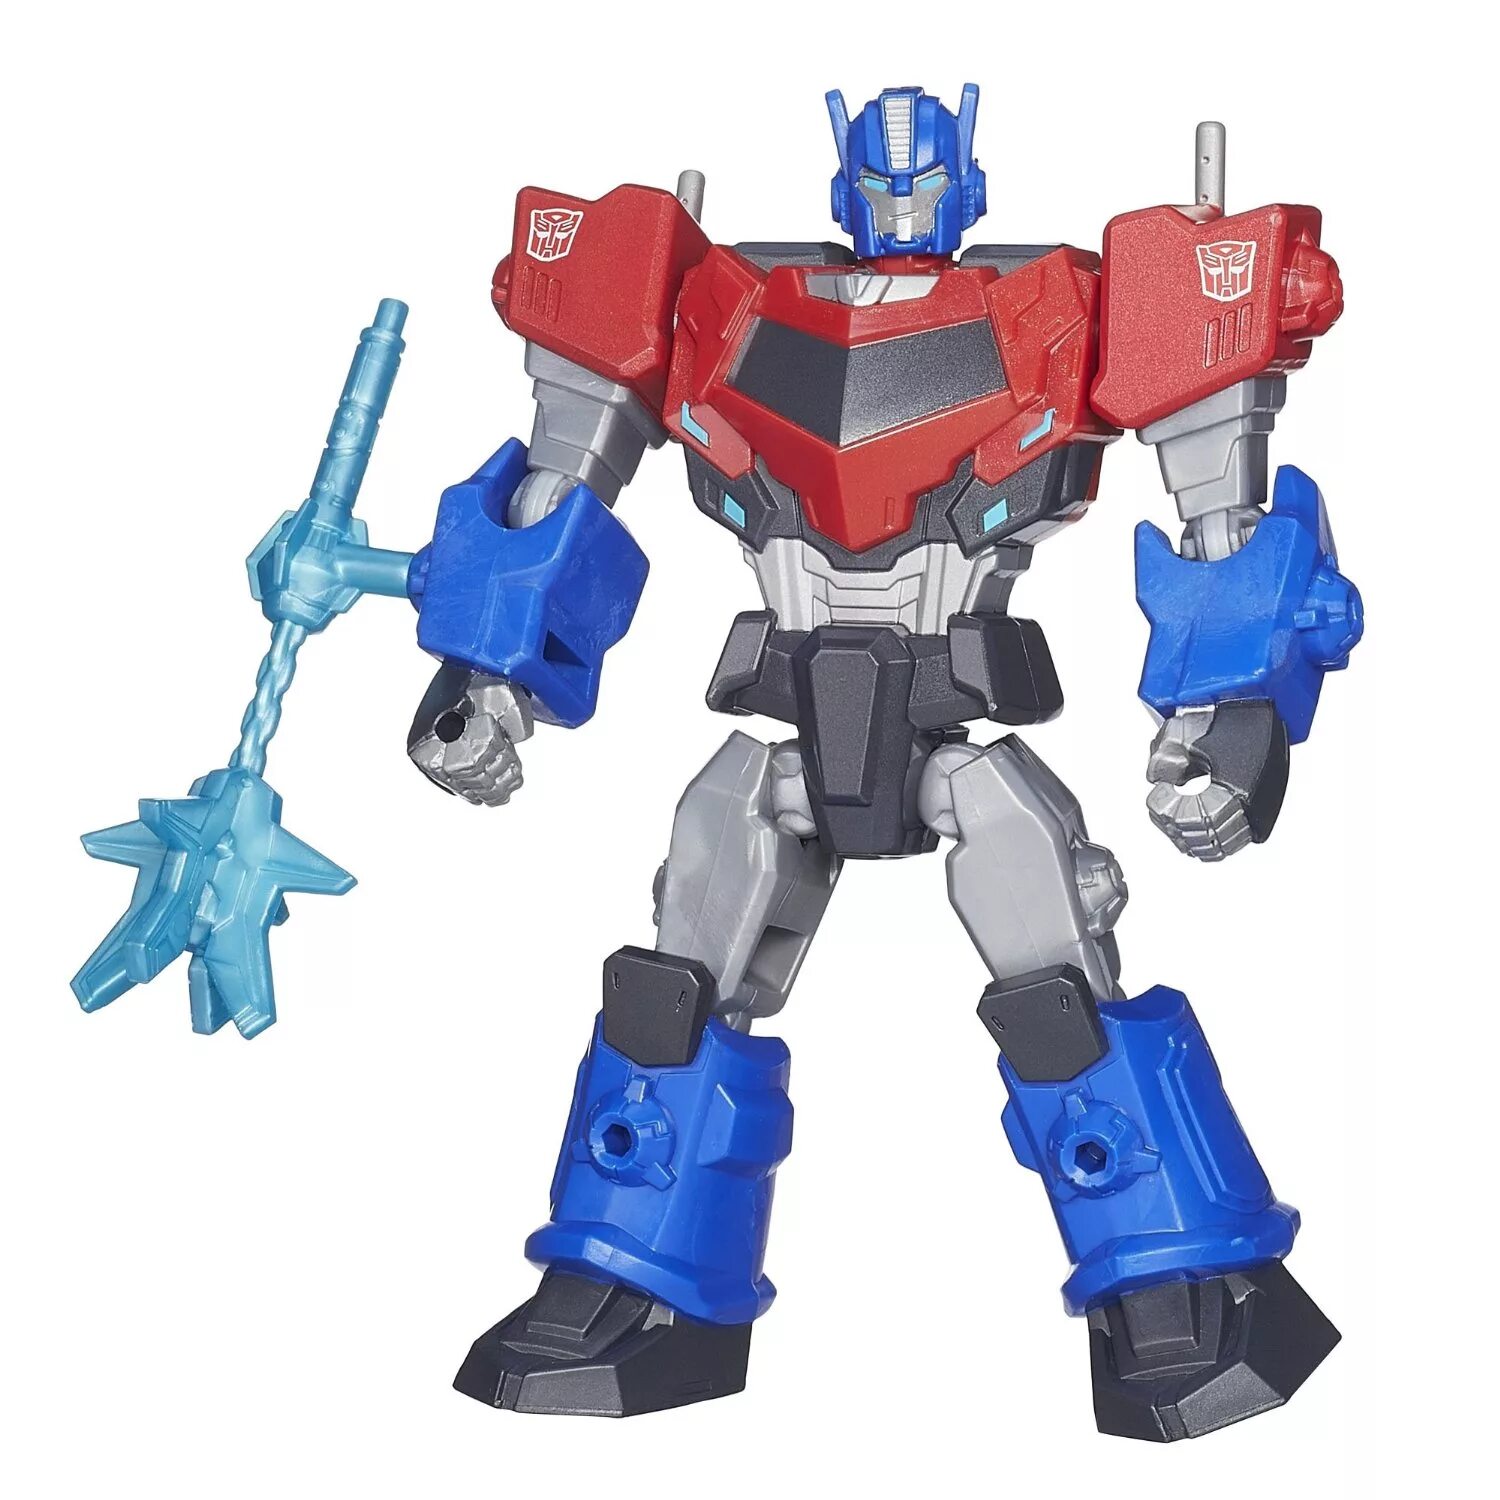 Робот оптимус. Игрушки трансформеры Hero Mashers. Transformers Hero Mashers Optimus Prime. Transformers Robots in Disguise игрушки Оптимус Прайм. Super Hero Mashers трансформеры.